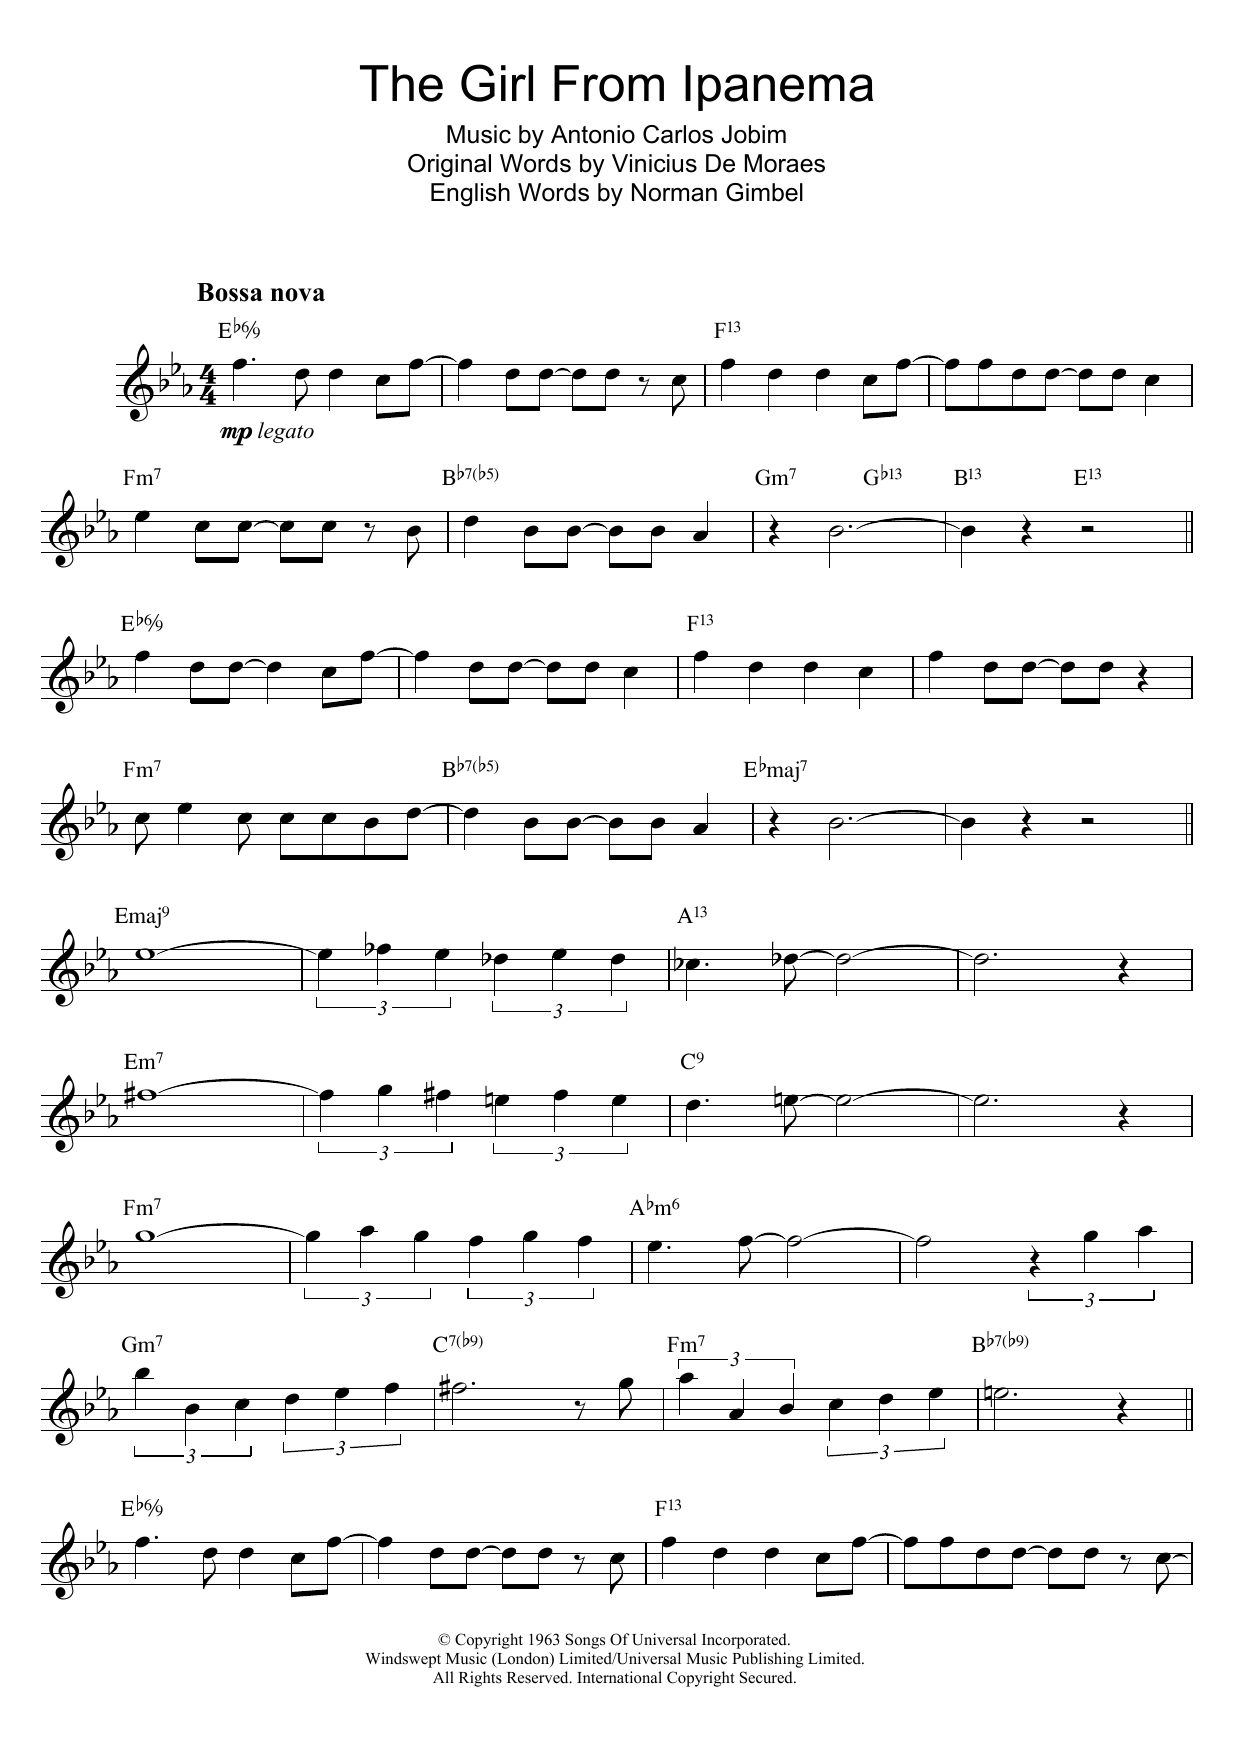 Antonio Carlos Jobim The Girl From Ipanema (Garota De Ipanema) Sheet Music Notes & Chords for Piano, Vocal & Guitar (Right-Hand Melody) - Download or Print PDF